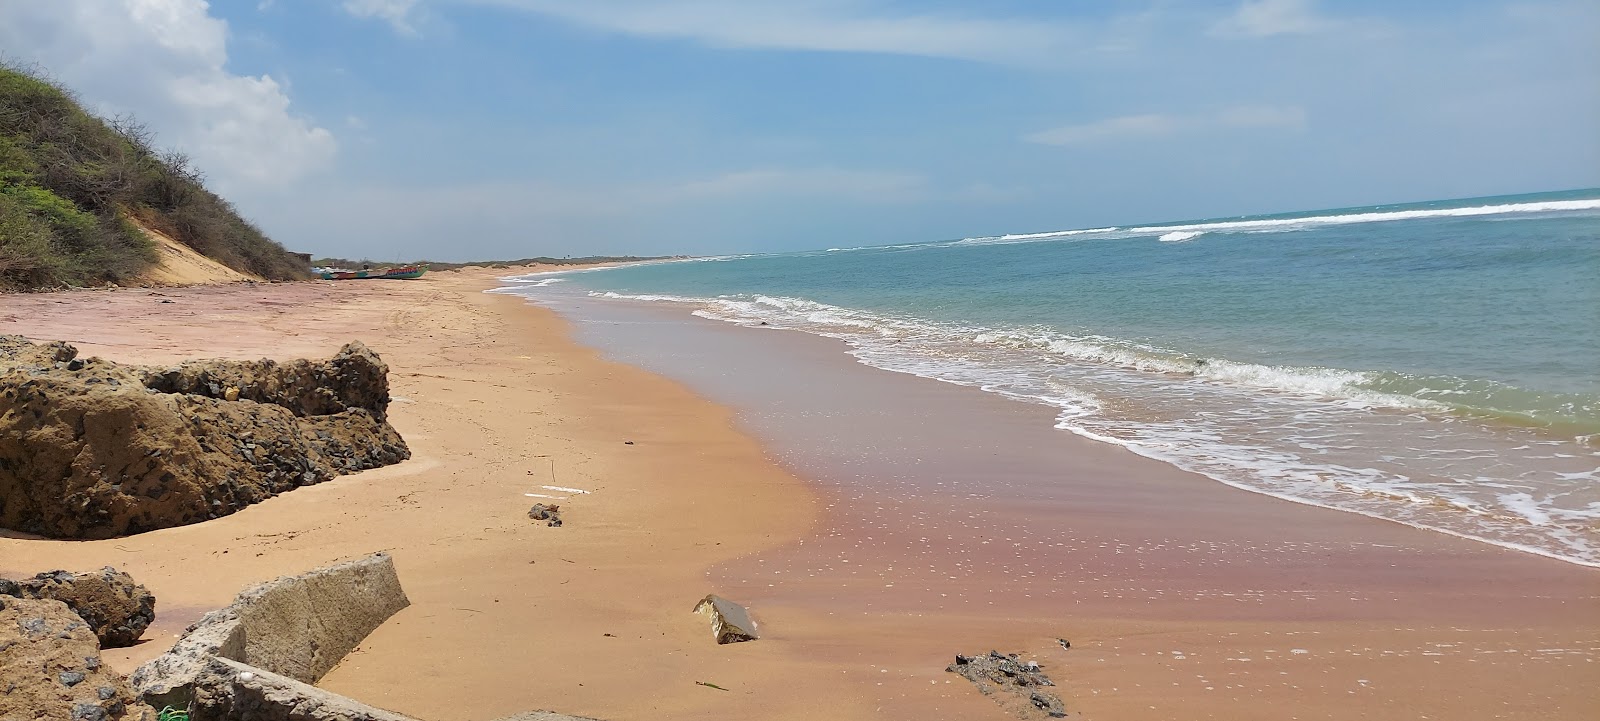 Fotografija Kooduthalai beach z prostorna obala